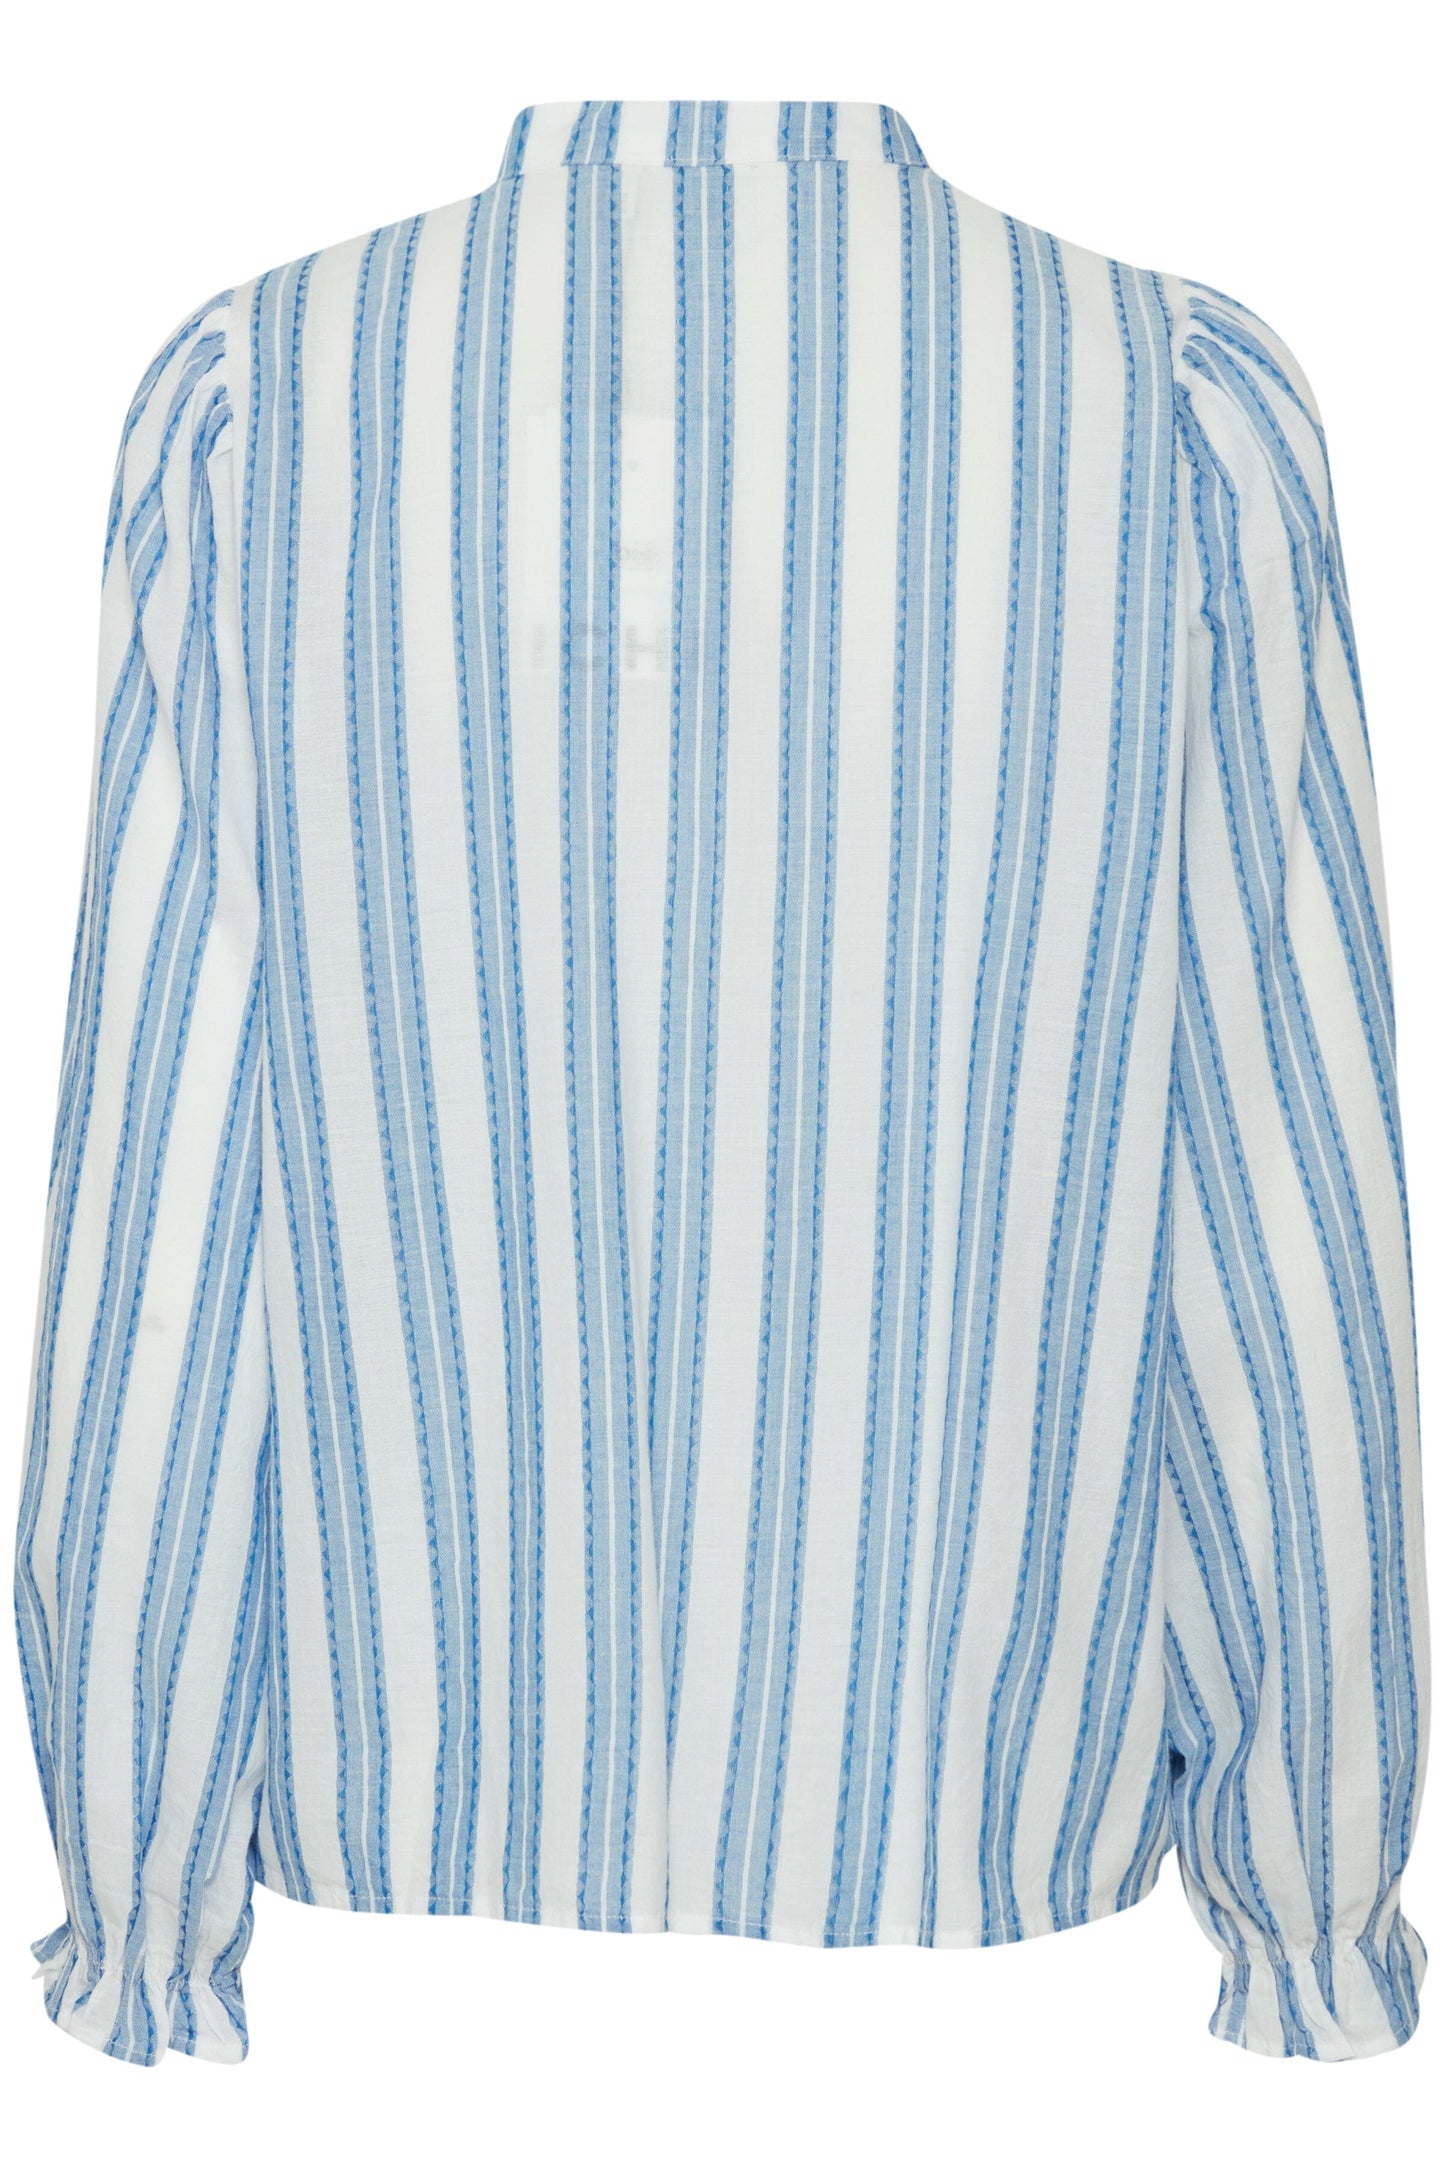 Ezomo Shirt in Palace Blue Stripe Shirt Ichi 